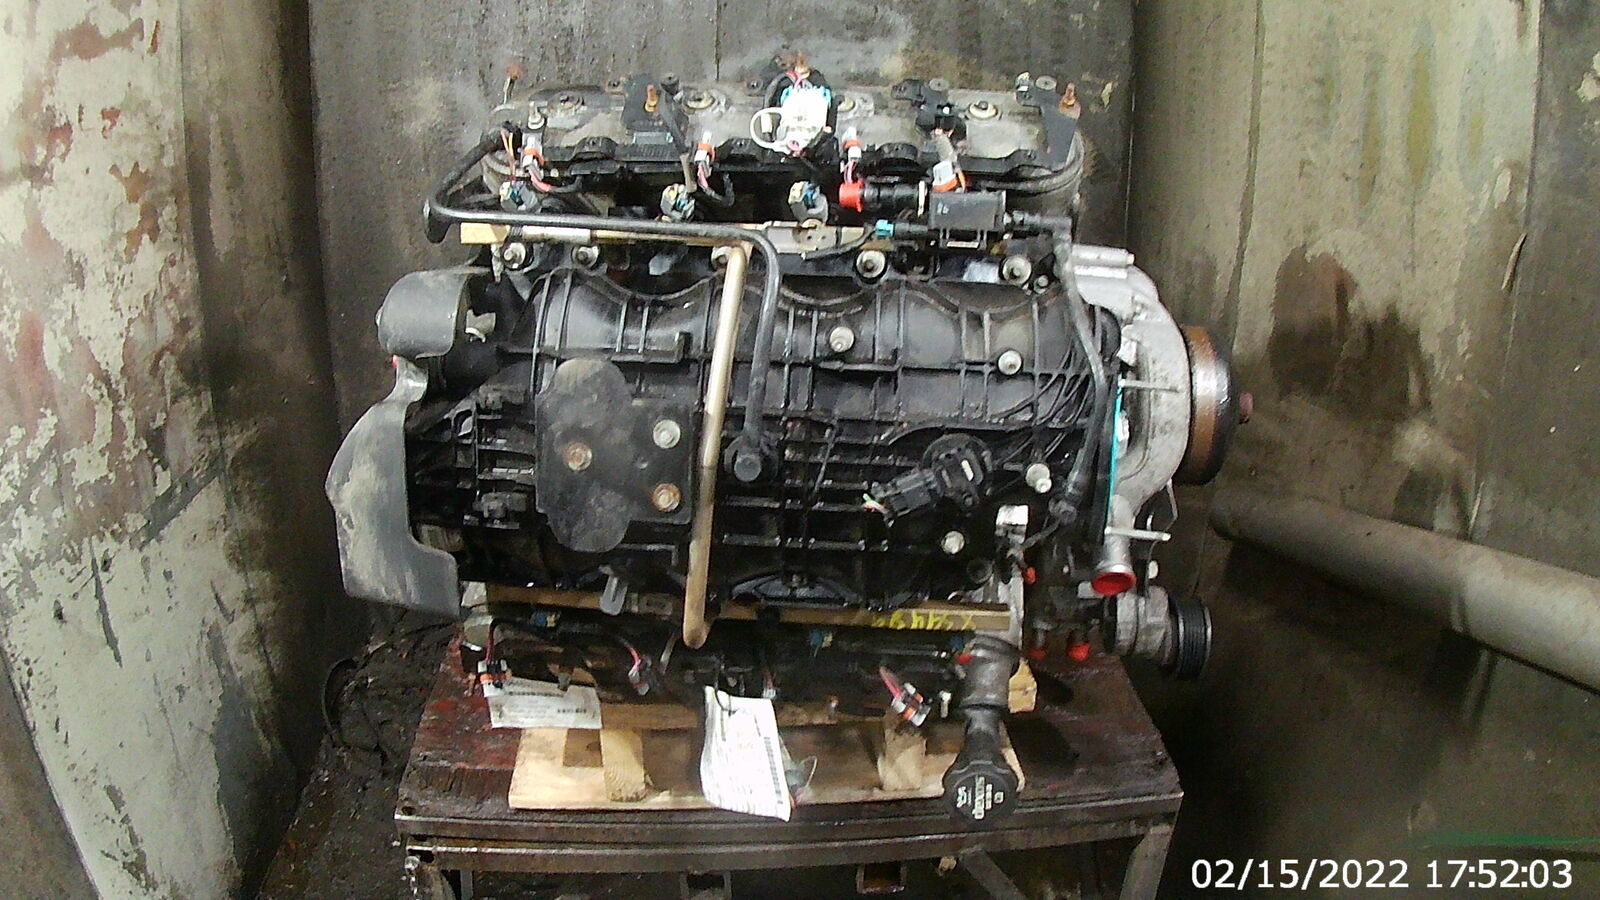 GMC Sierra 1500 4.8L Engine 2010-2013